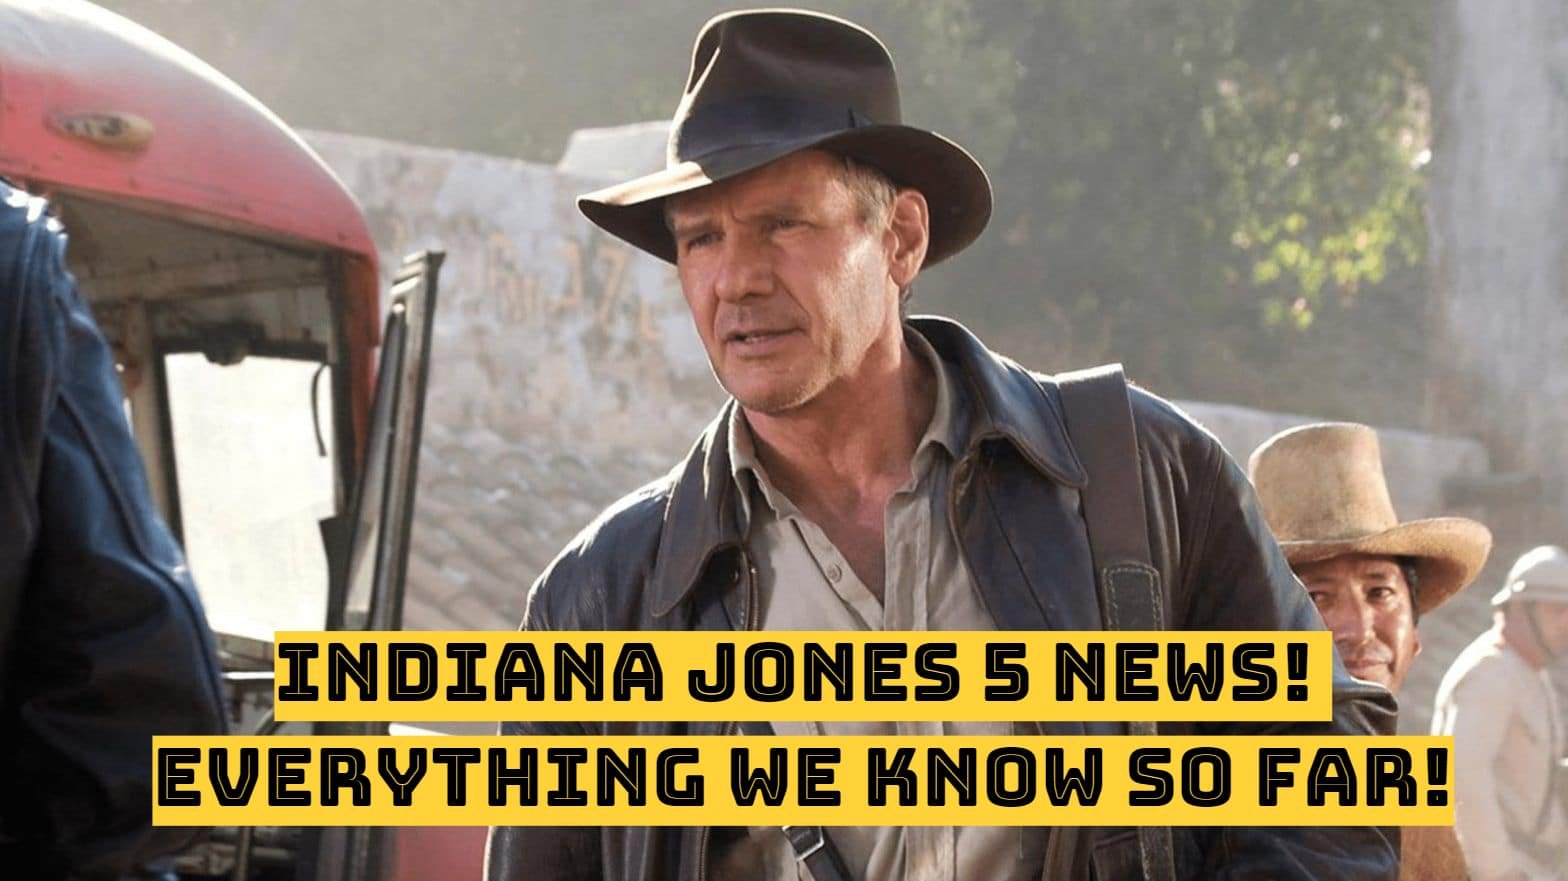 Indiana Jones 5 News! - Everything We Know So Far!